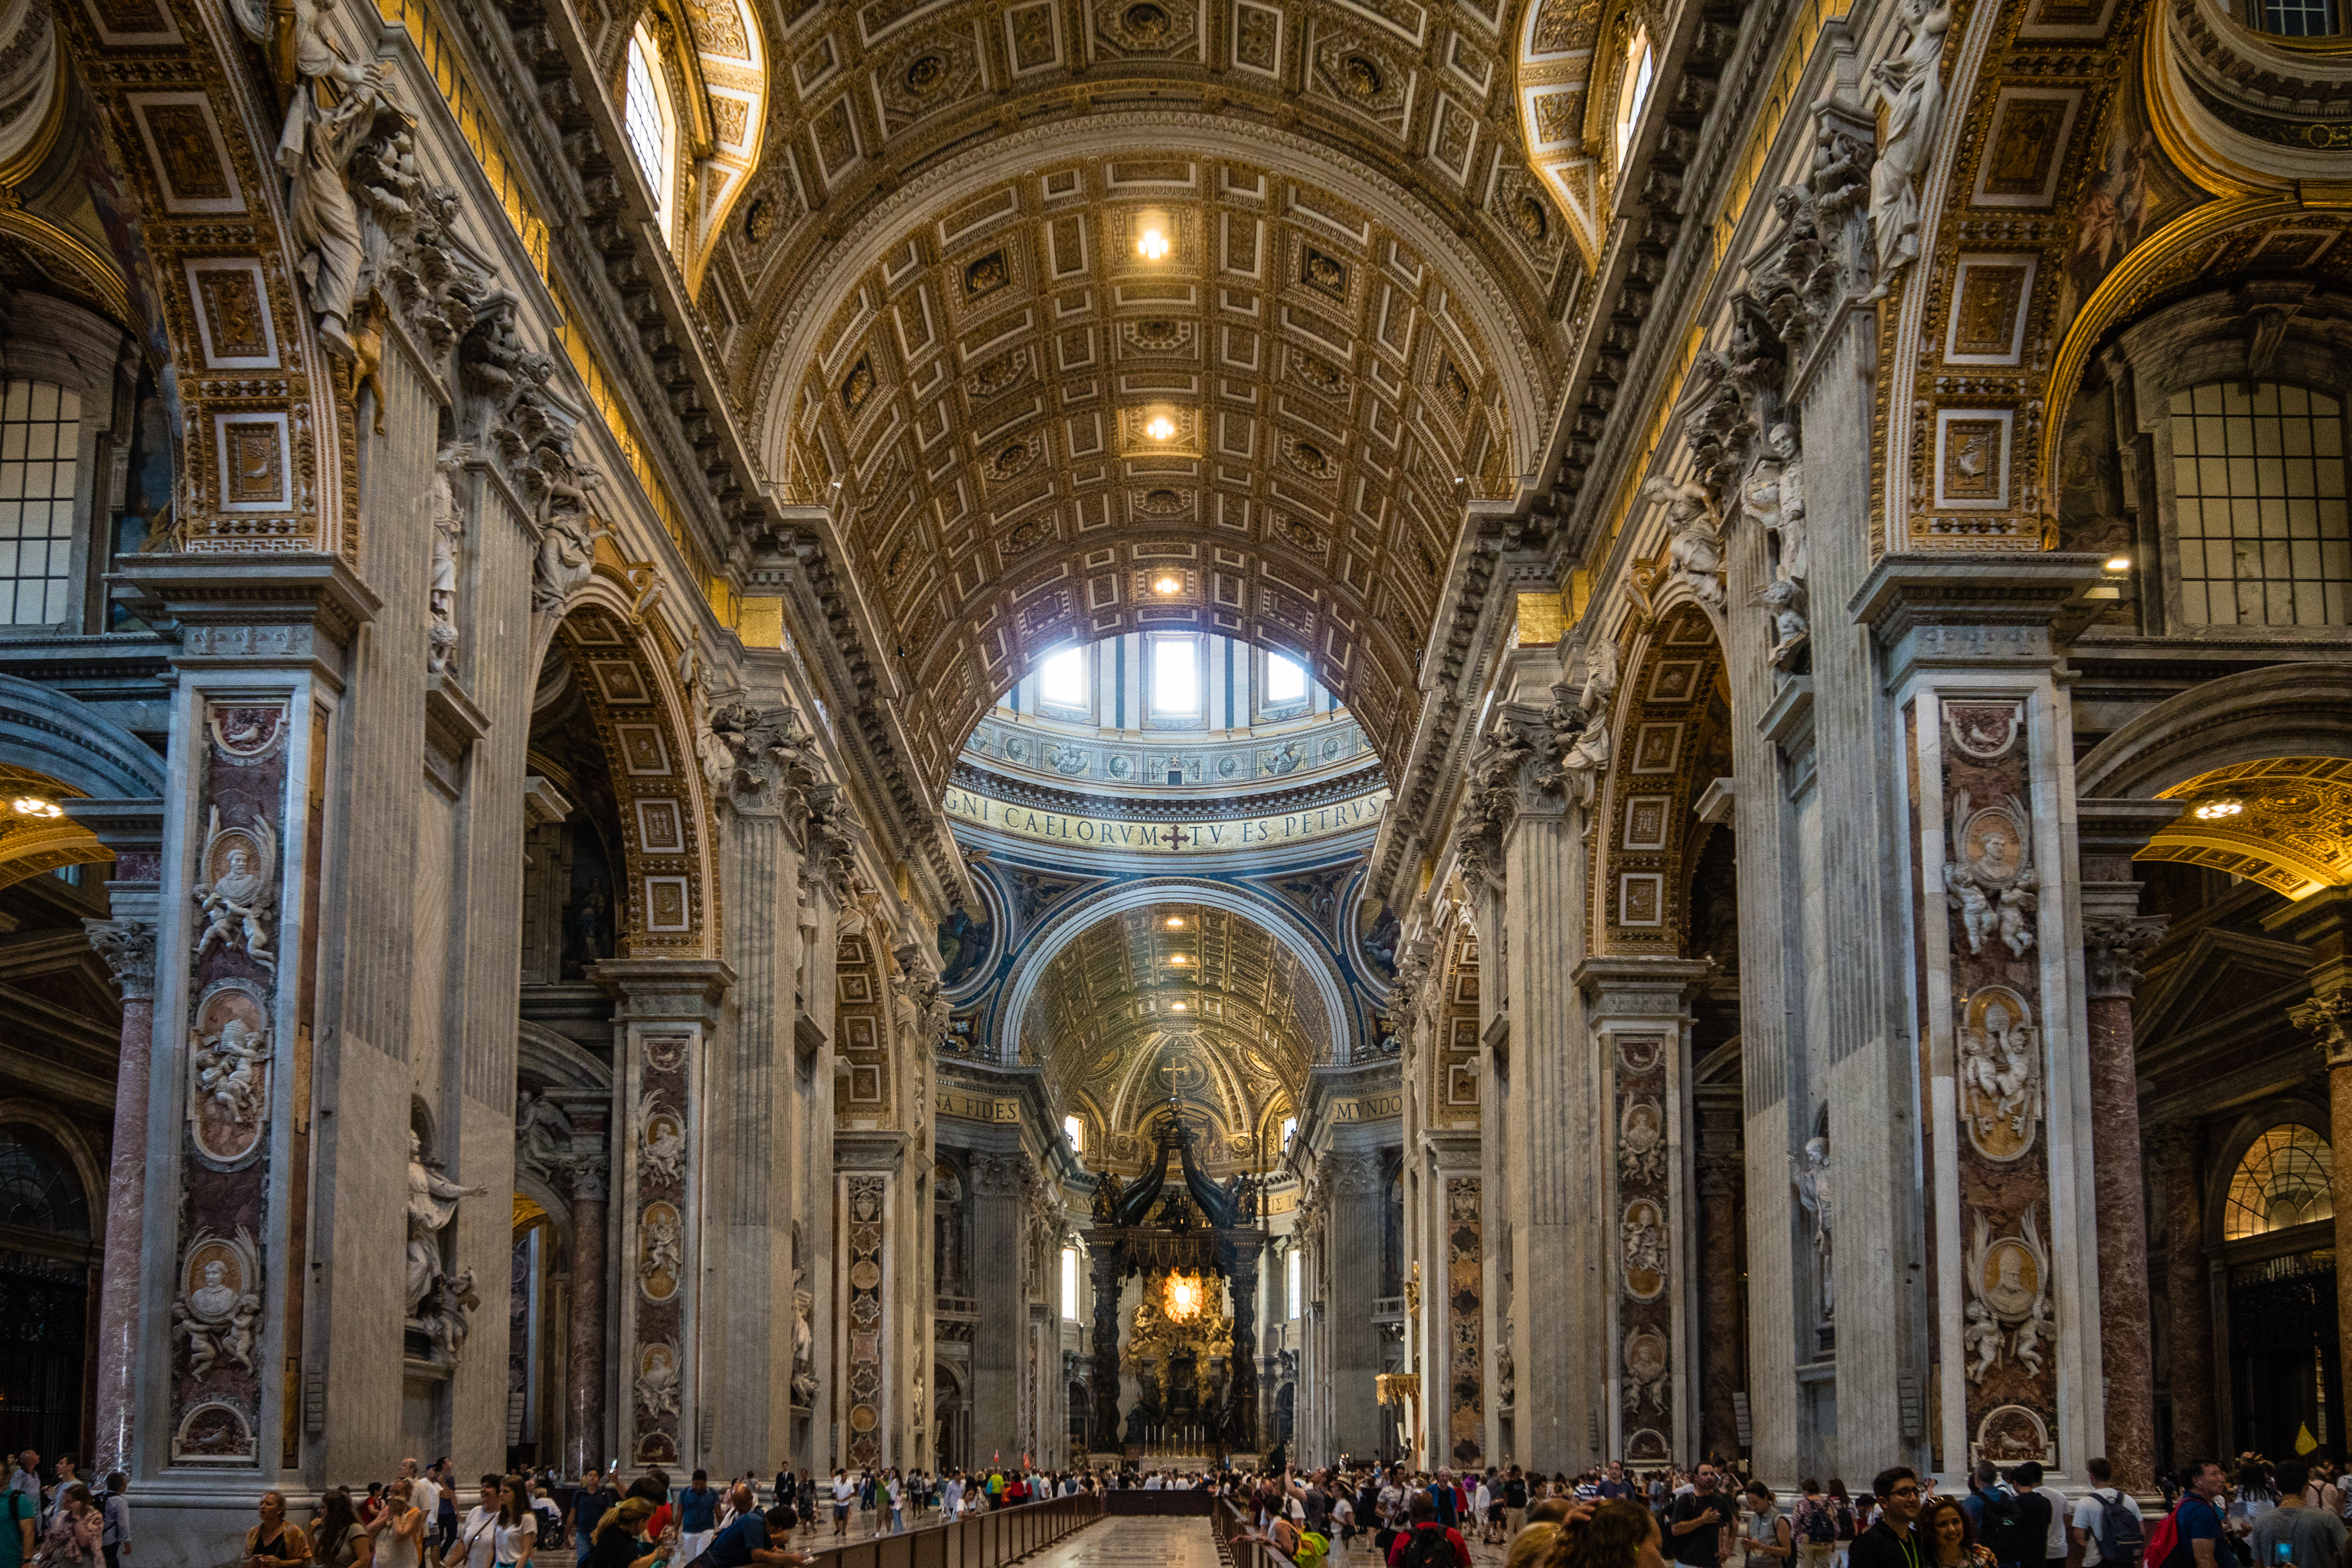 Image of interior of Basilica.